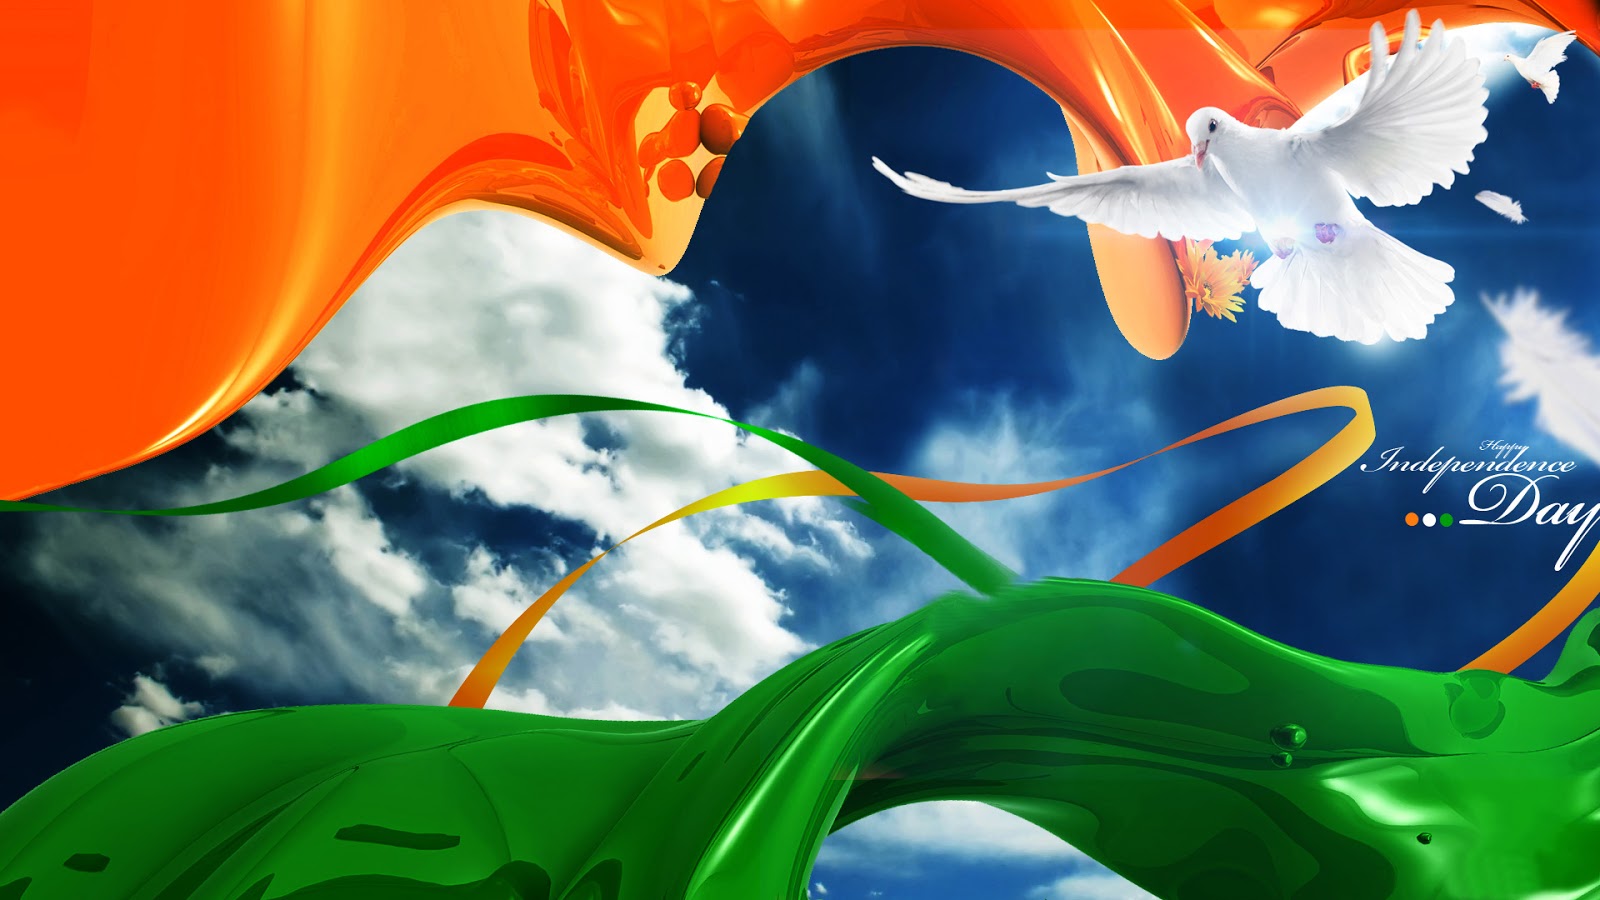 Indian National Flag Images Free Download